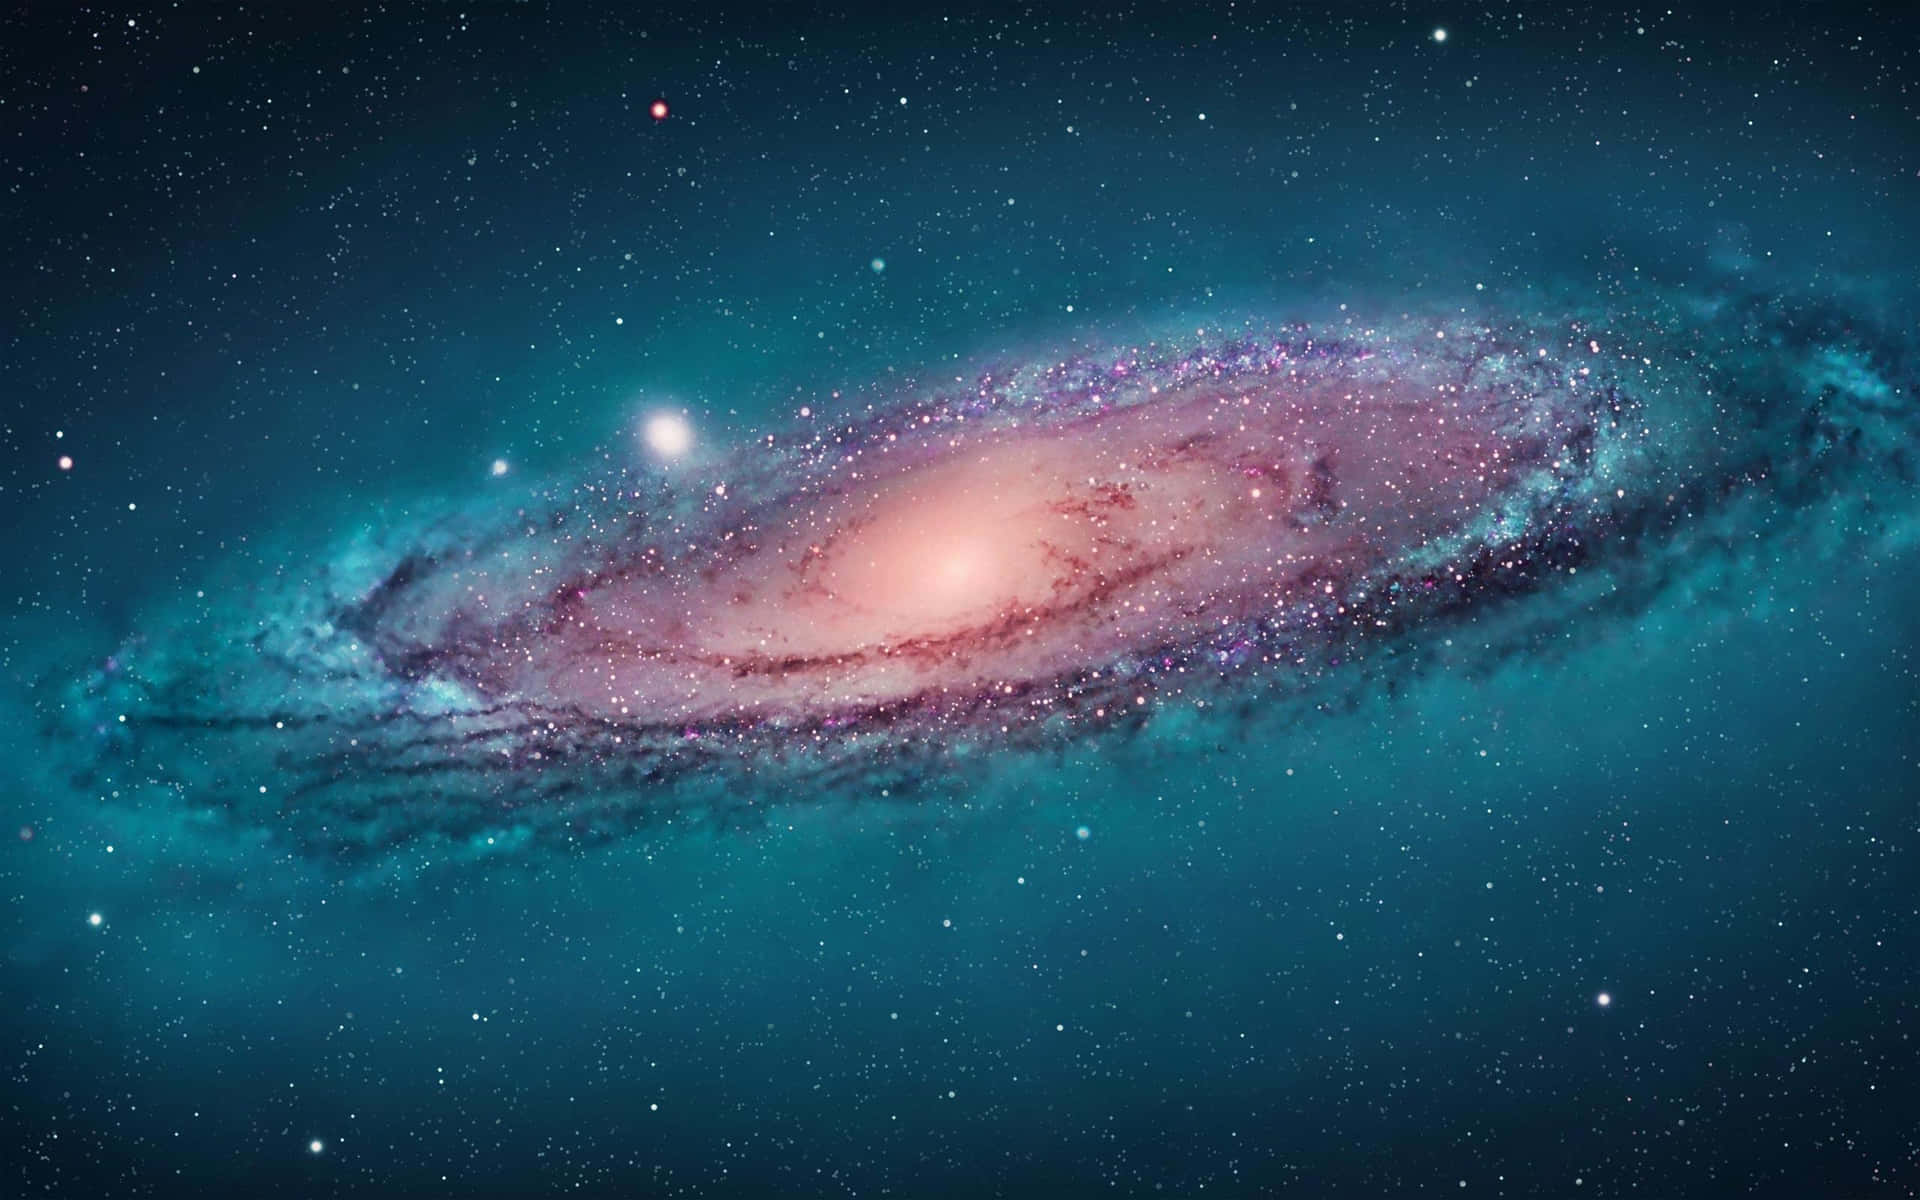 Stunning Spiral Galaxy in the Night Sky Wallpaper